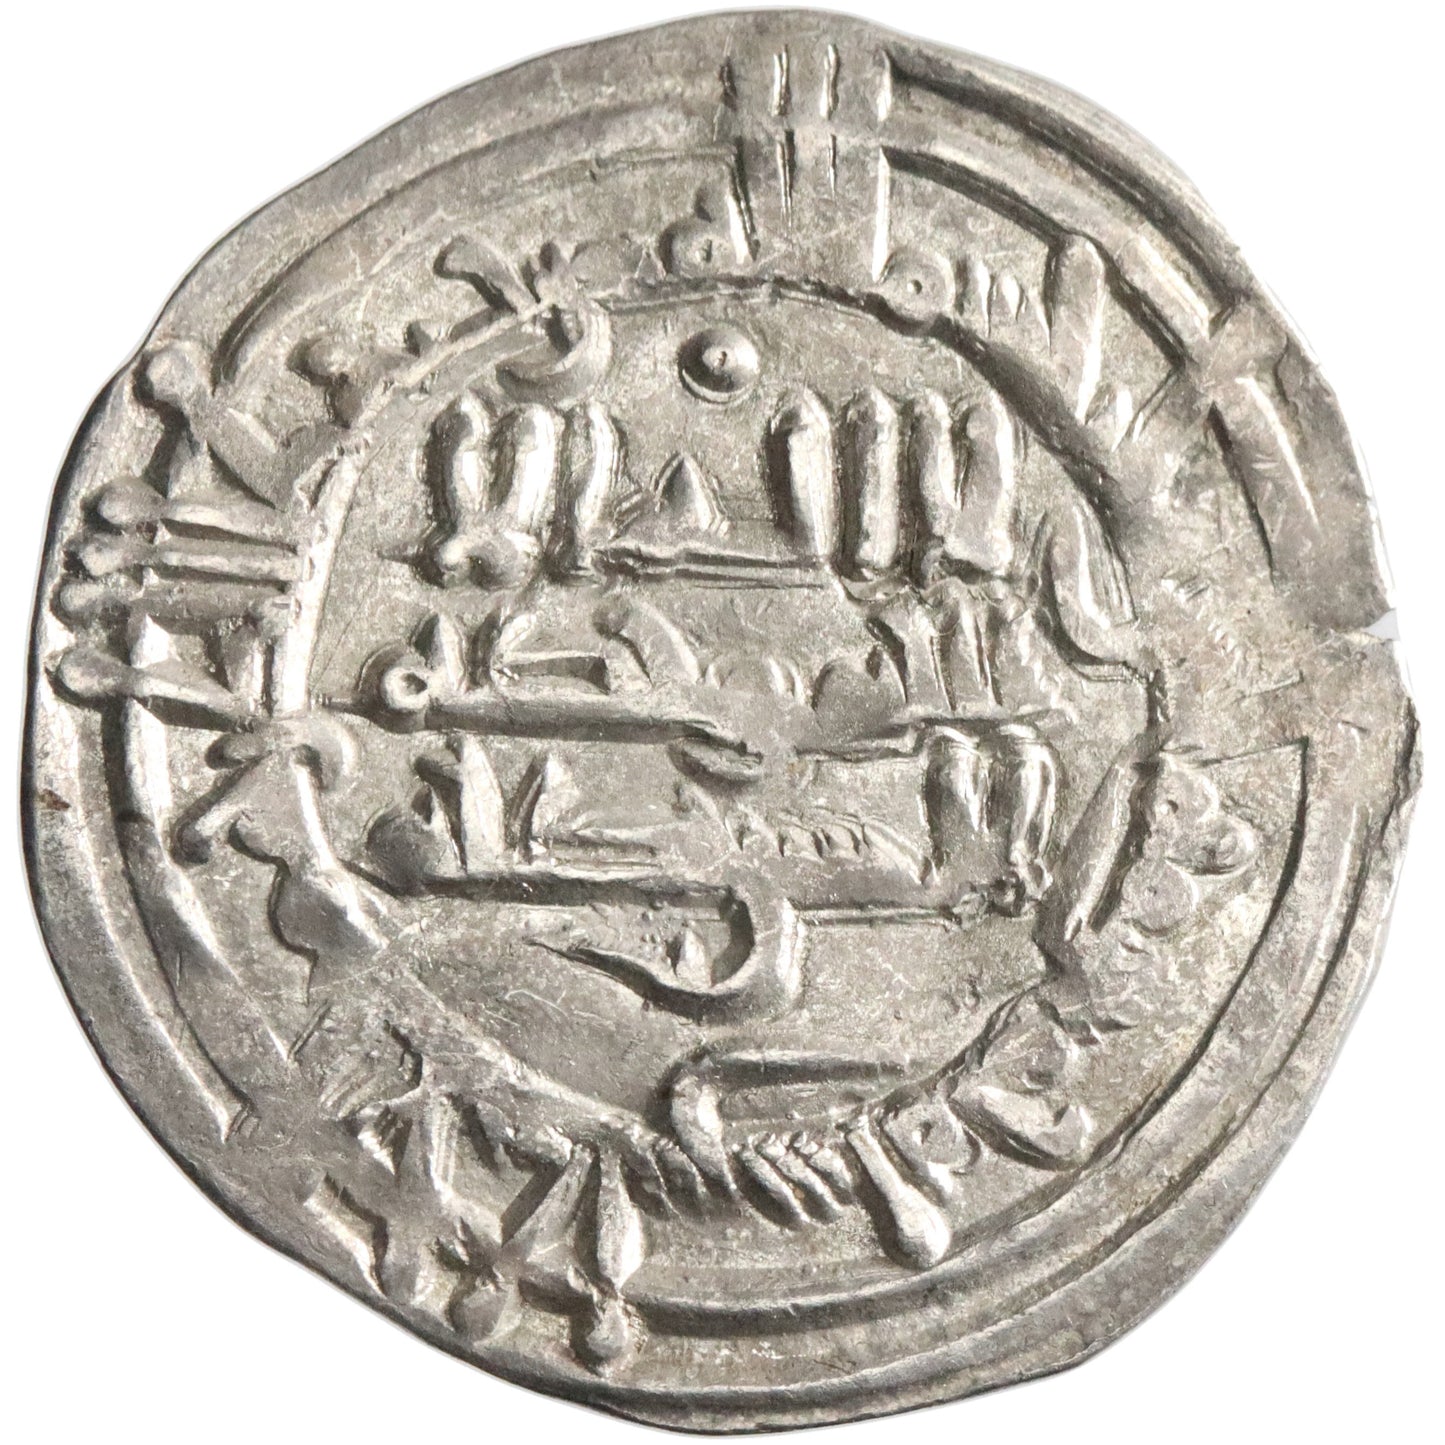 Umayyad of Spain, Hisham II, silver dirham, al-Andalus (Spain) mint, AH 385, citing 'Amir